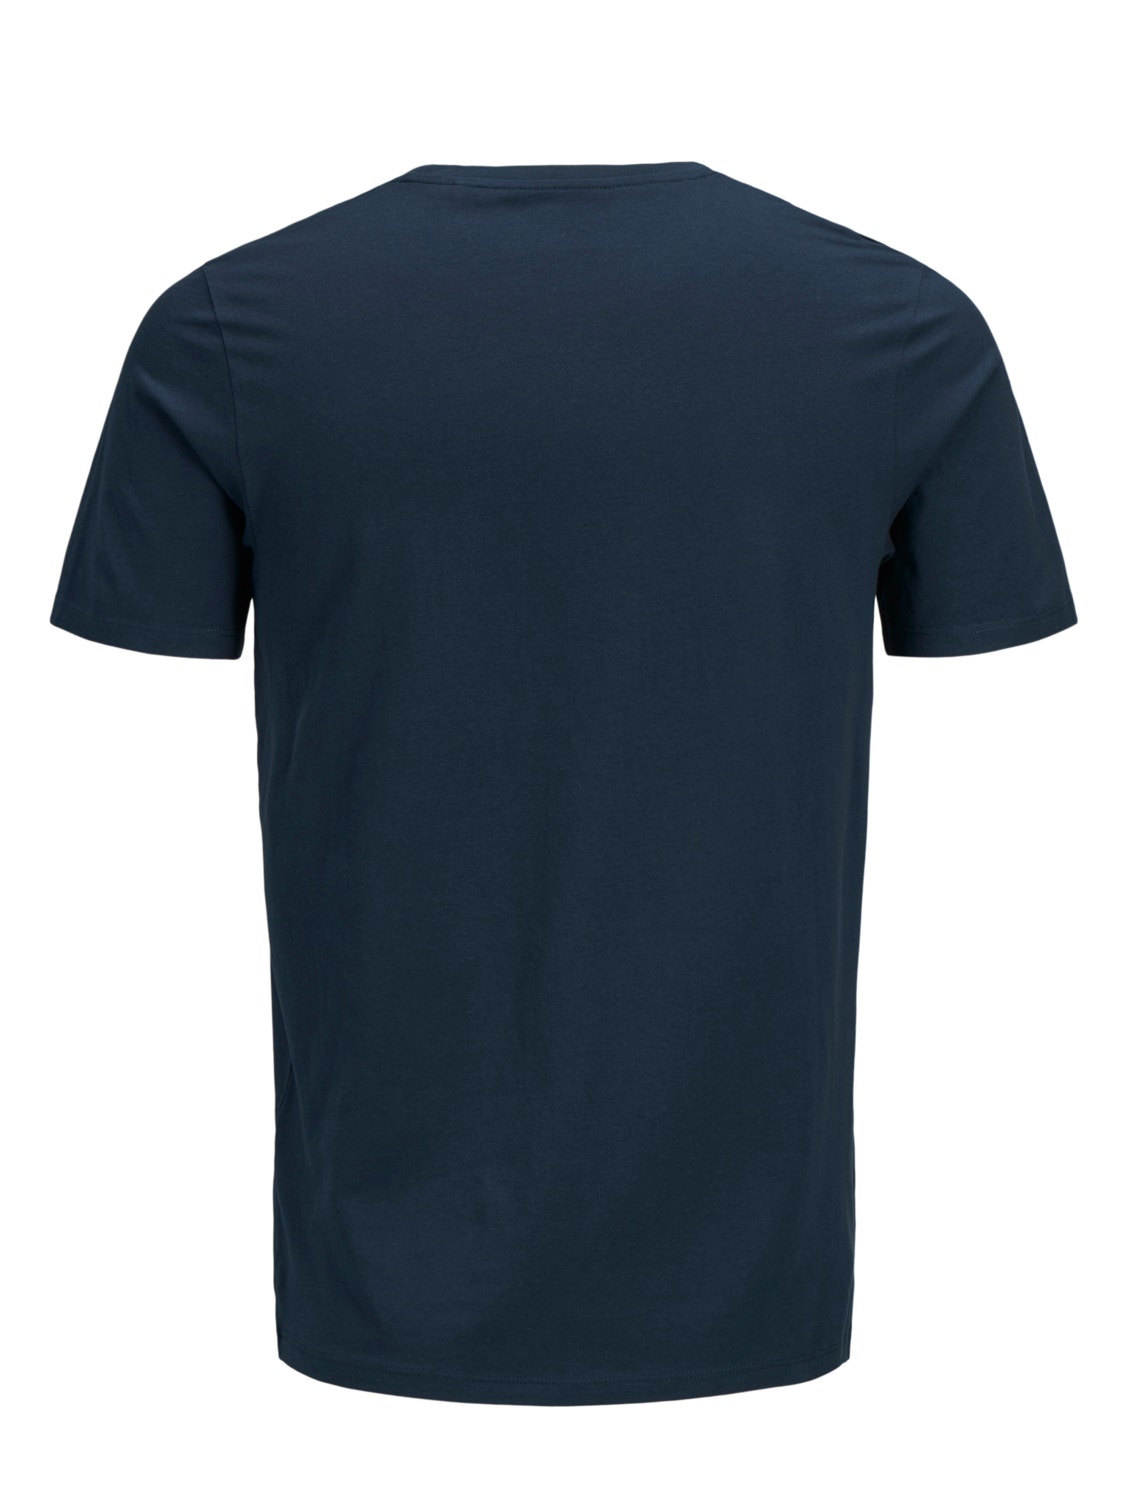 Jack & Jones Plus Size T-shirt Logo -Navy Blazer - 12184987